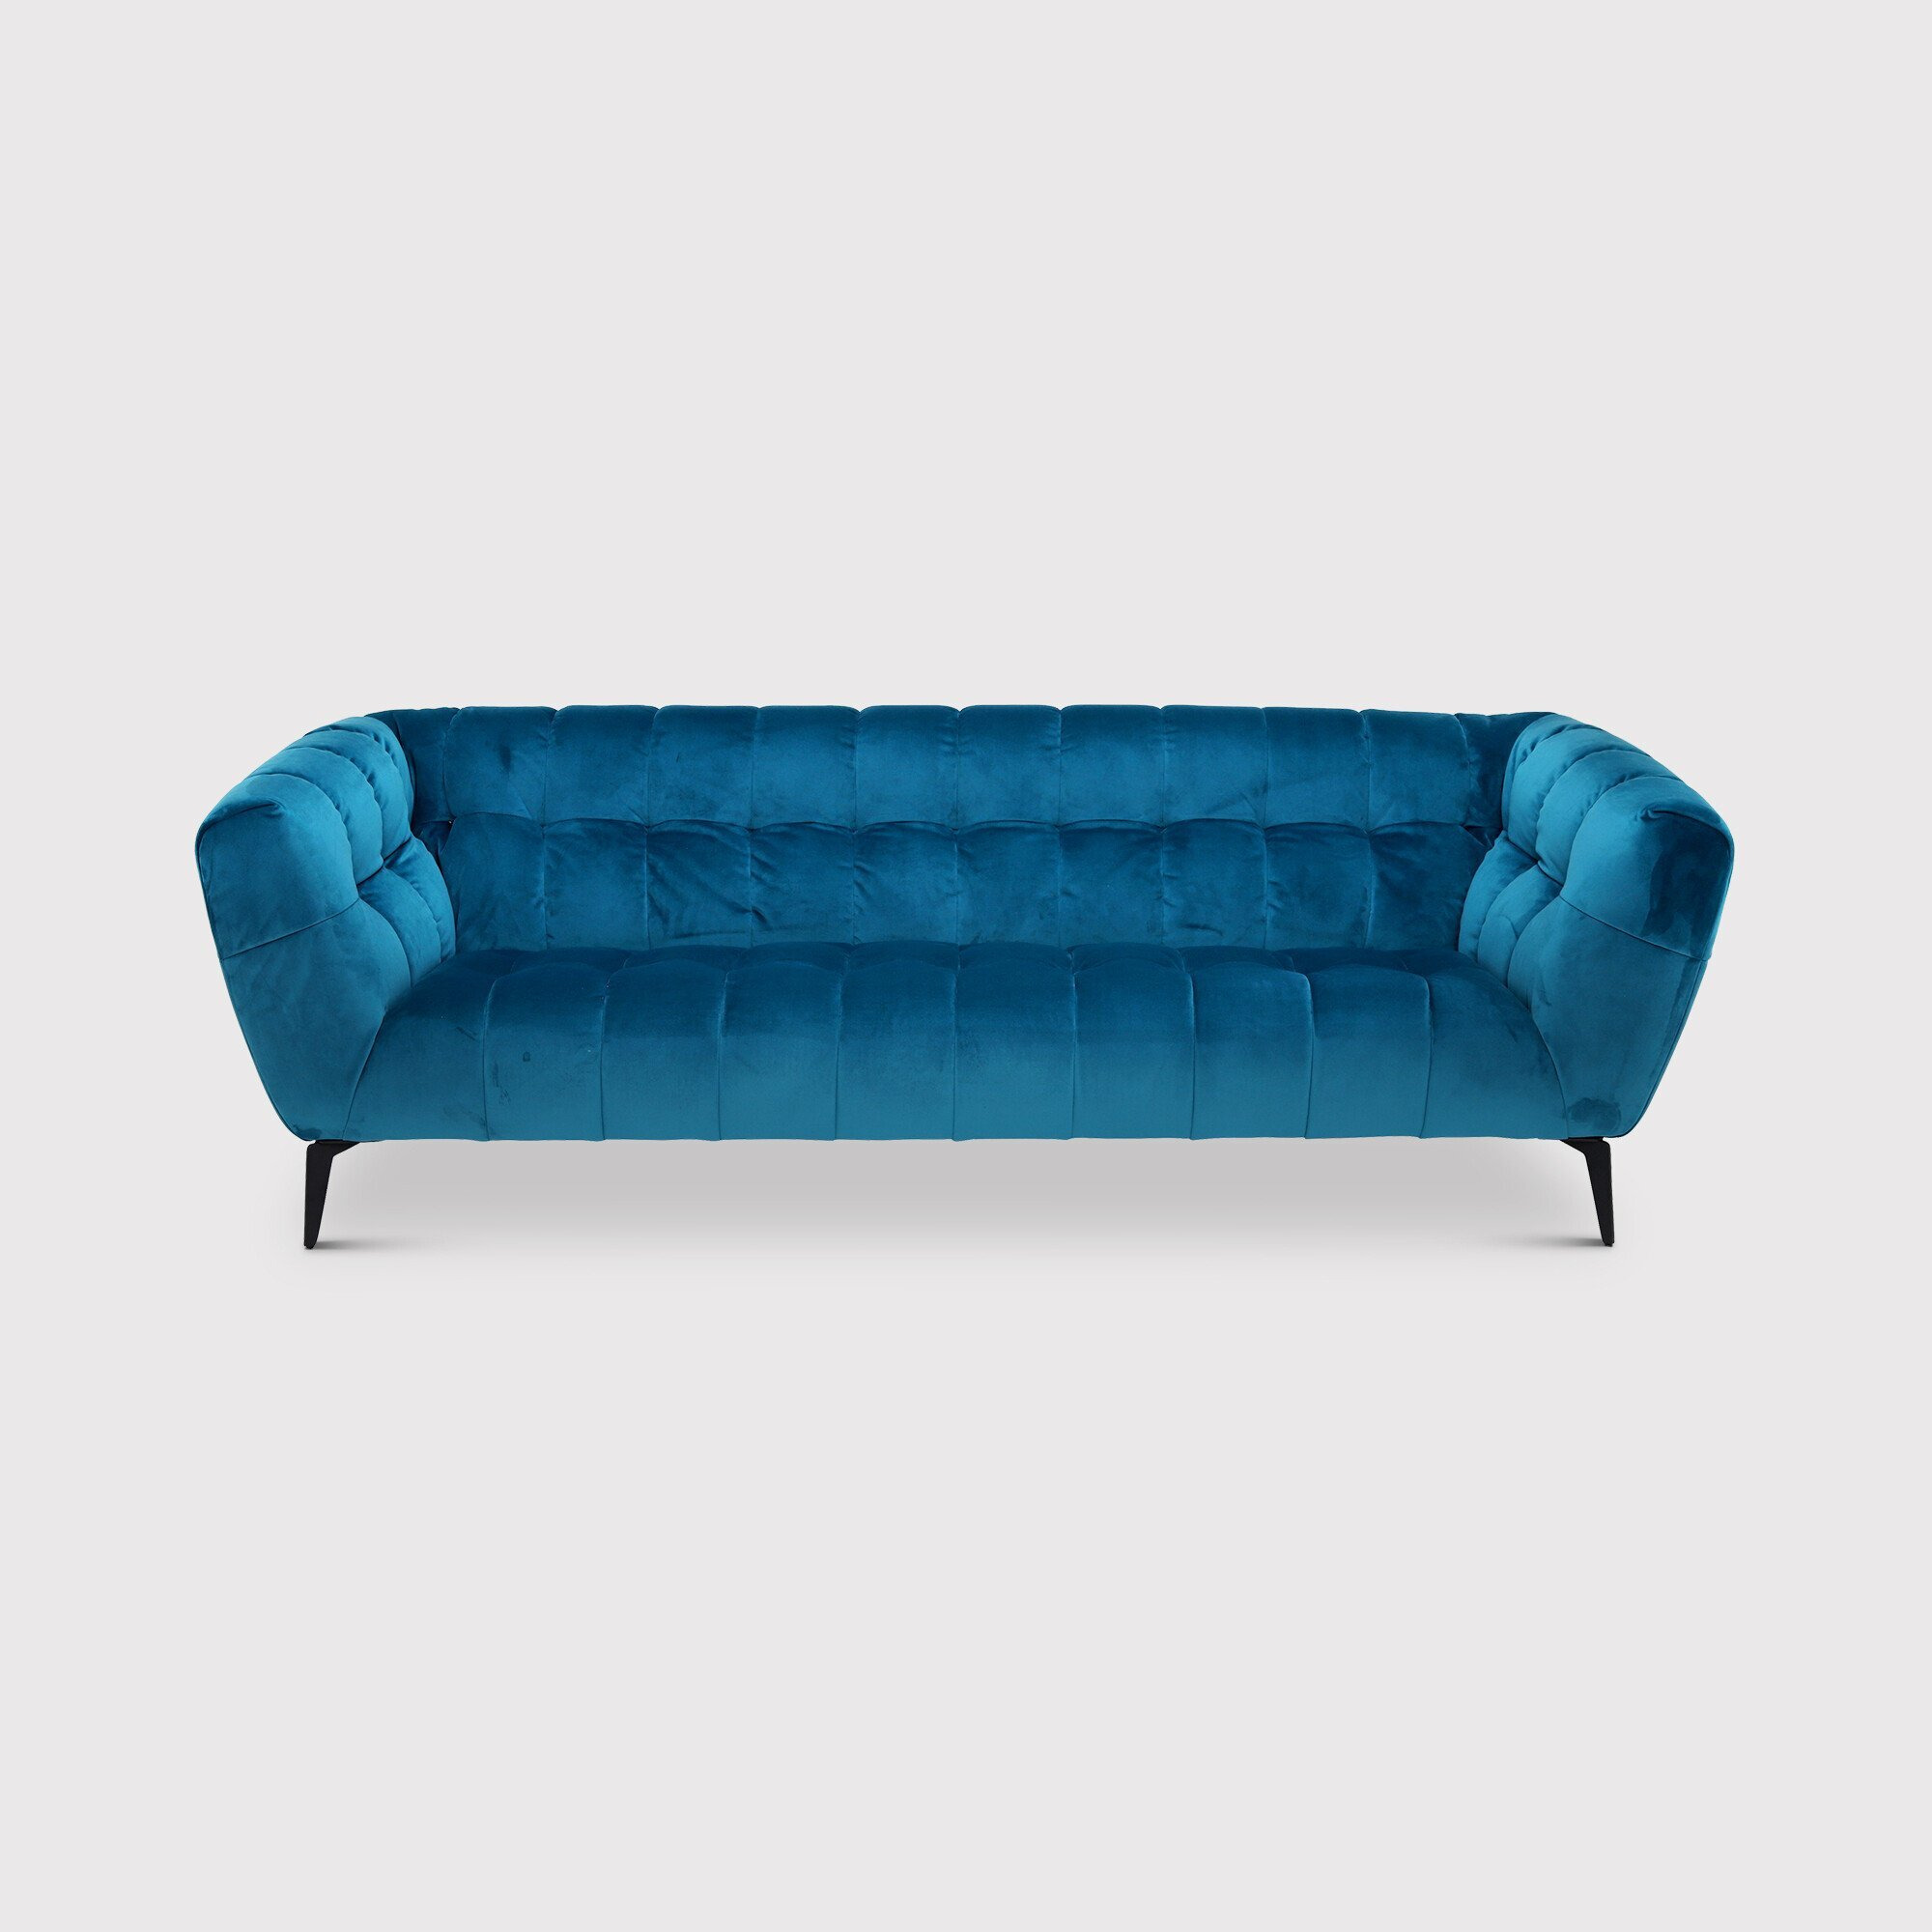 Azalea 3 Seater Sofa, Blue Fabric - Barker & Stonehouse - image 1